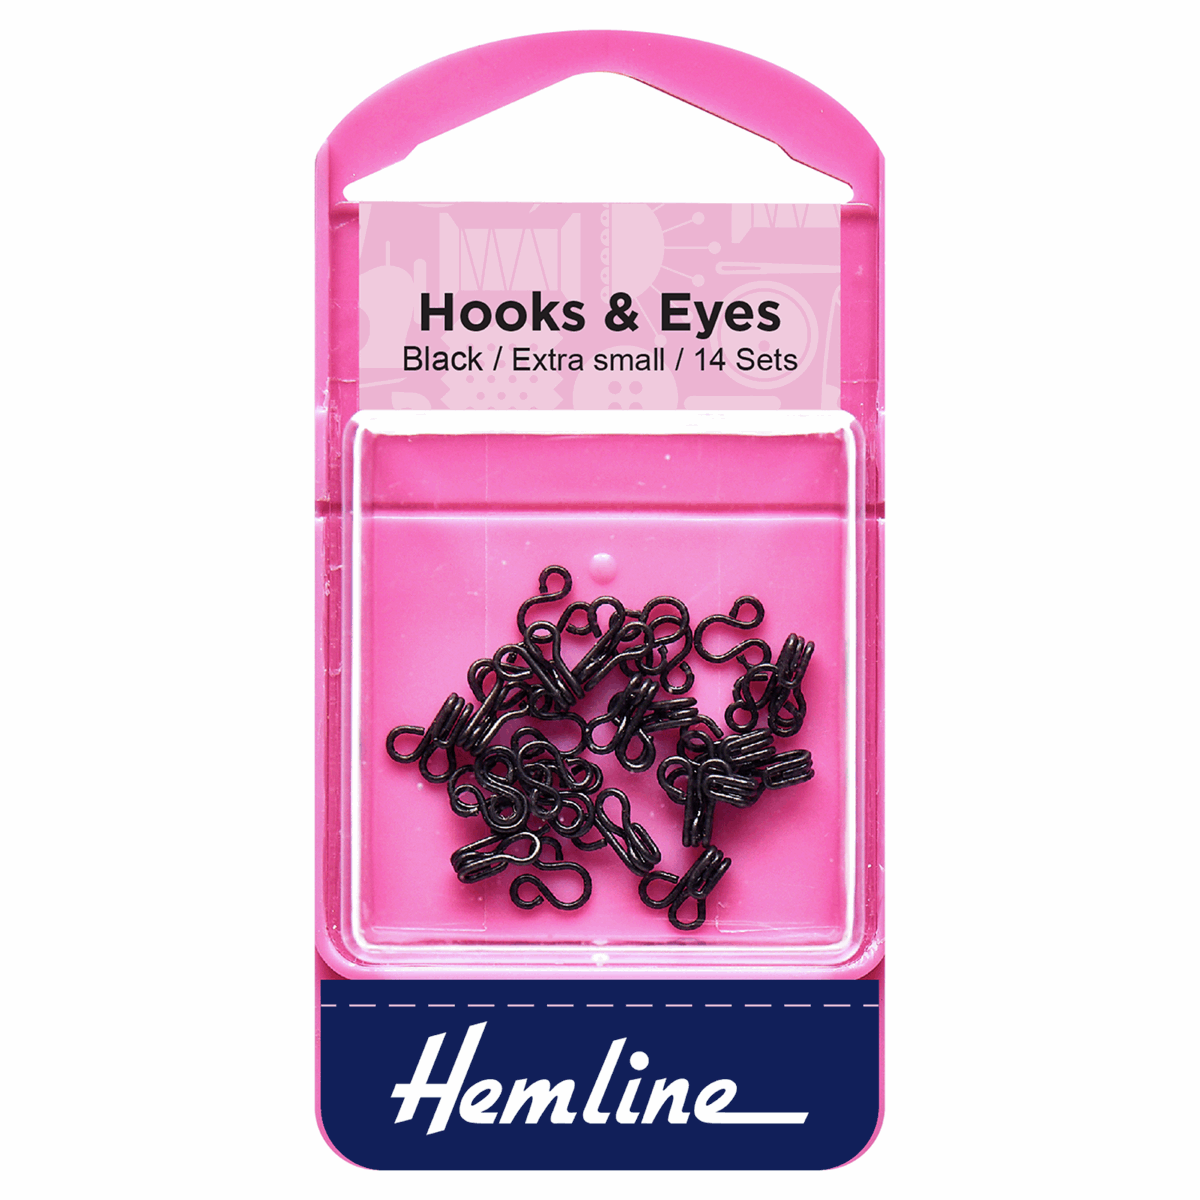 Hemline Black Hook & Eyes - Size 0 (14 Sets)